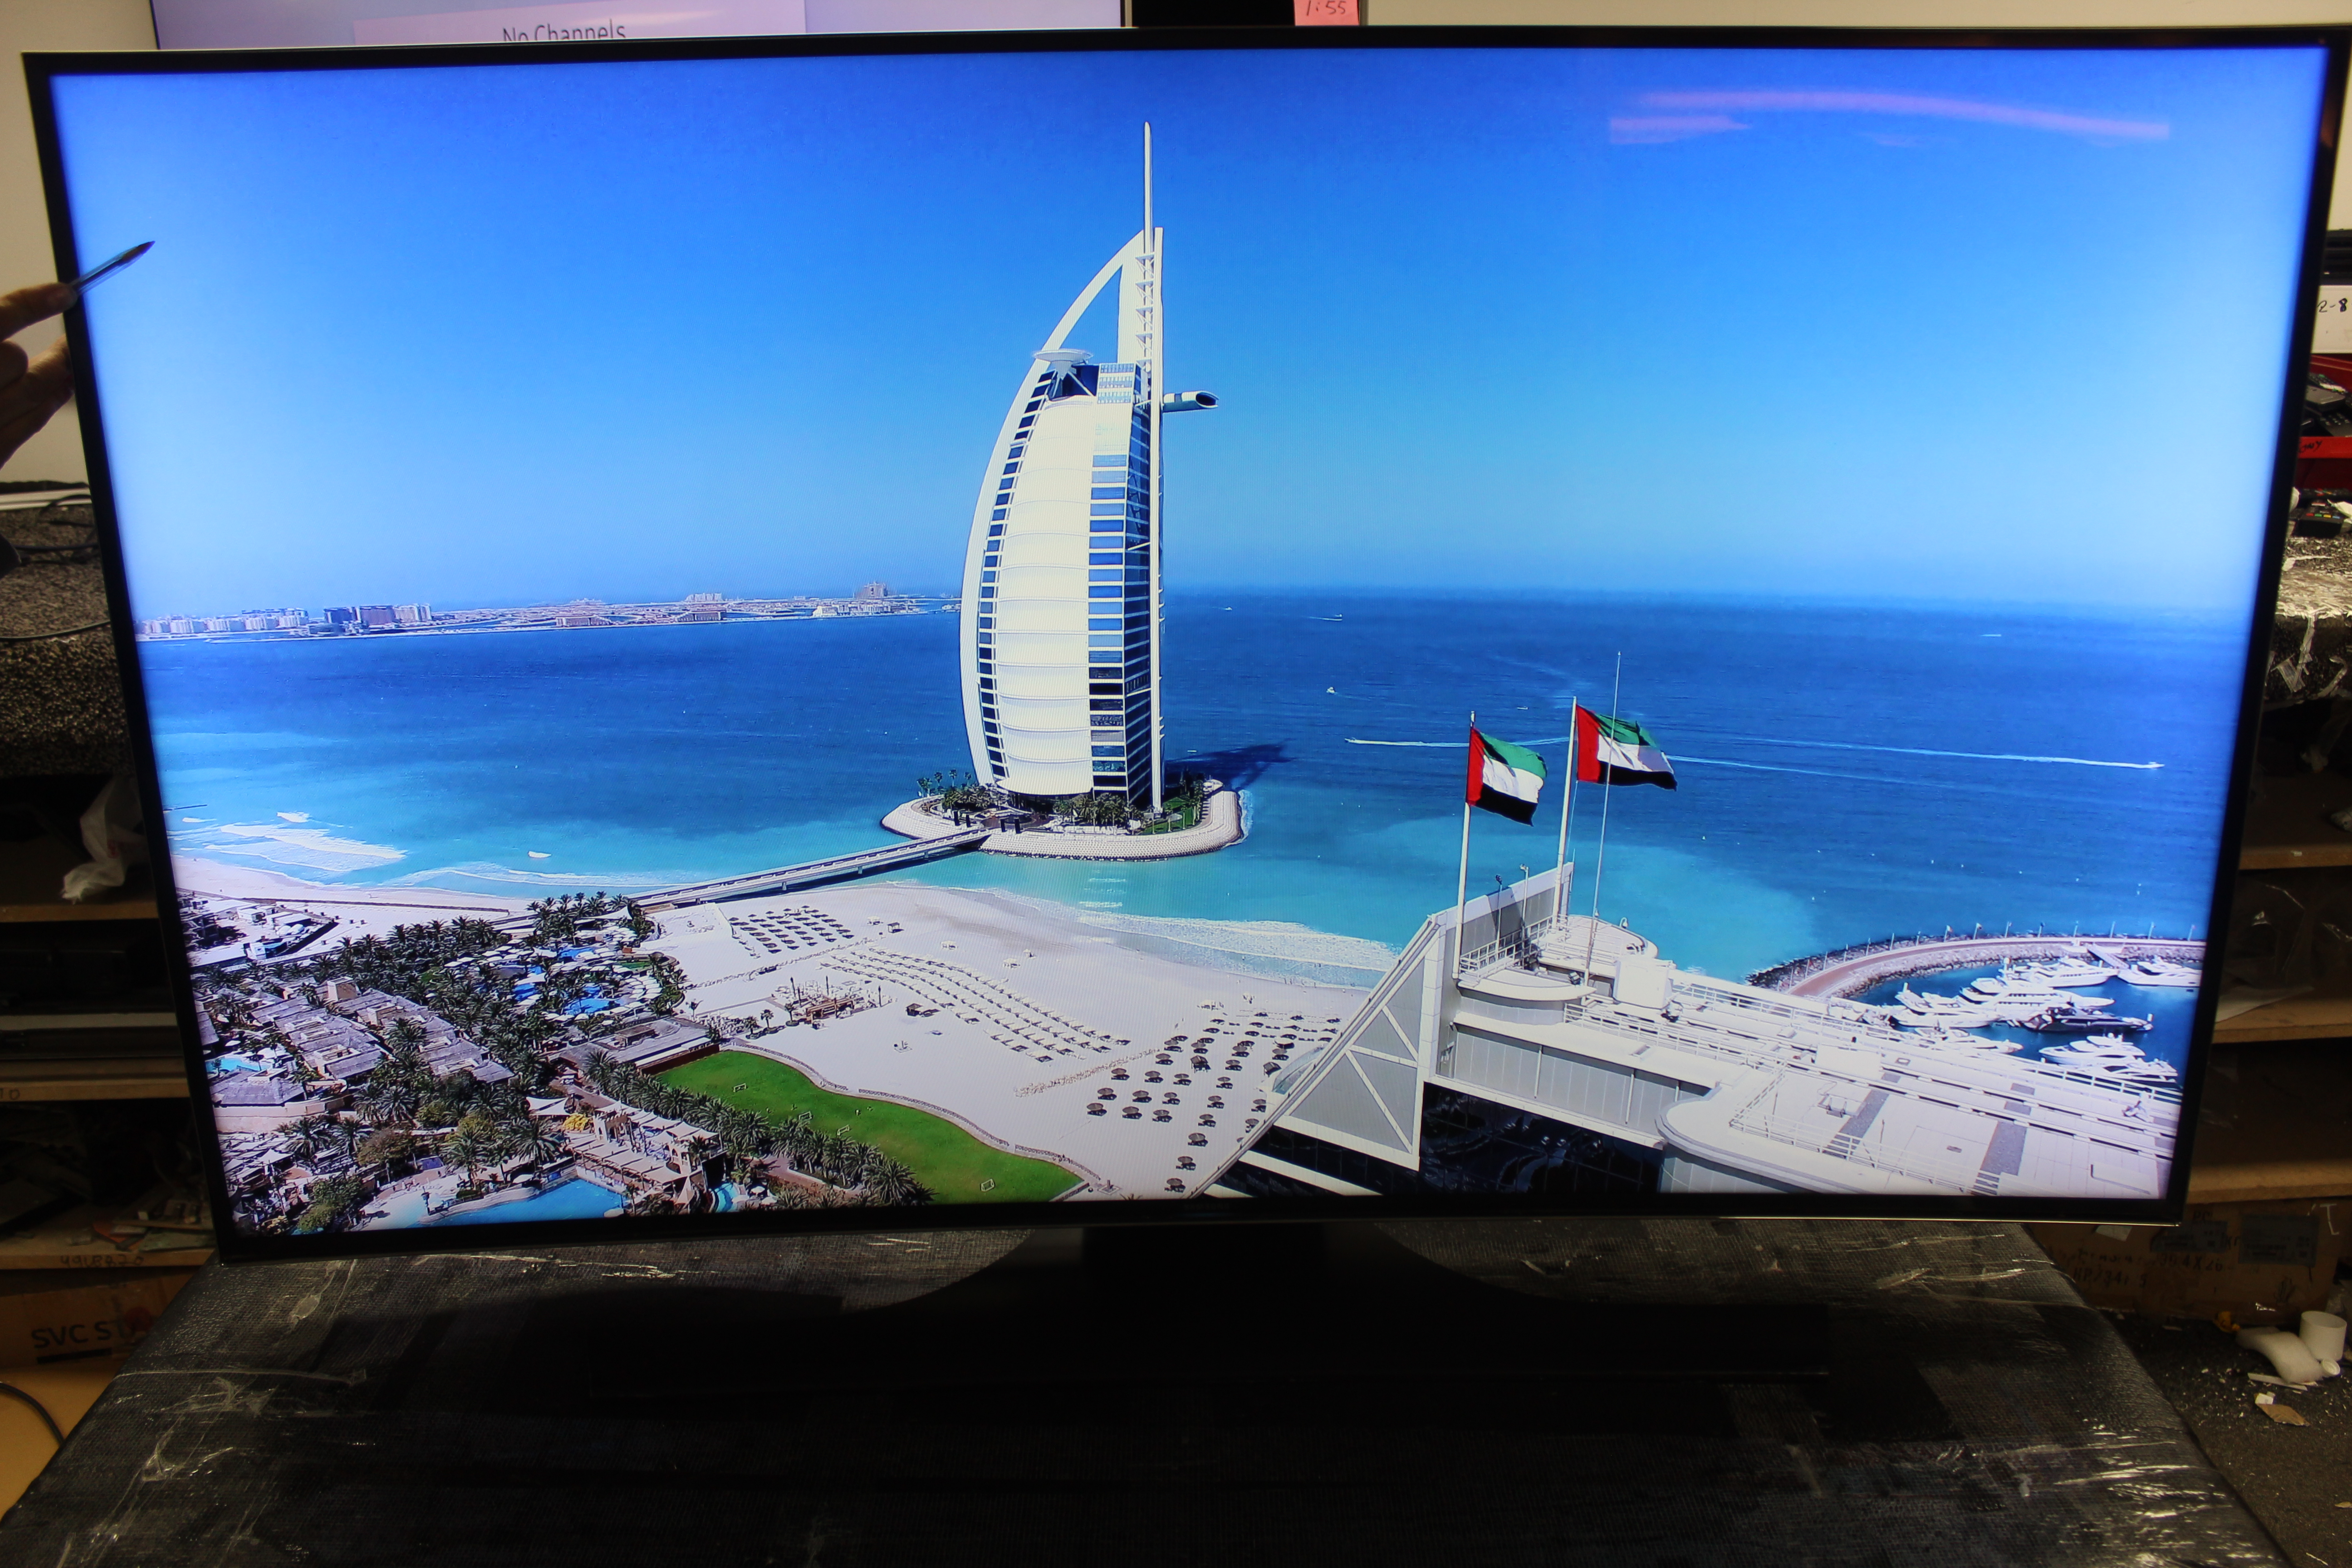 55 Samsung UE55HU8200 Curved 4k Ultra HD Freeview HD Freesat HD Smart 3D LED TV